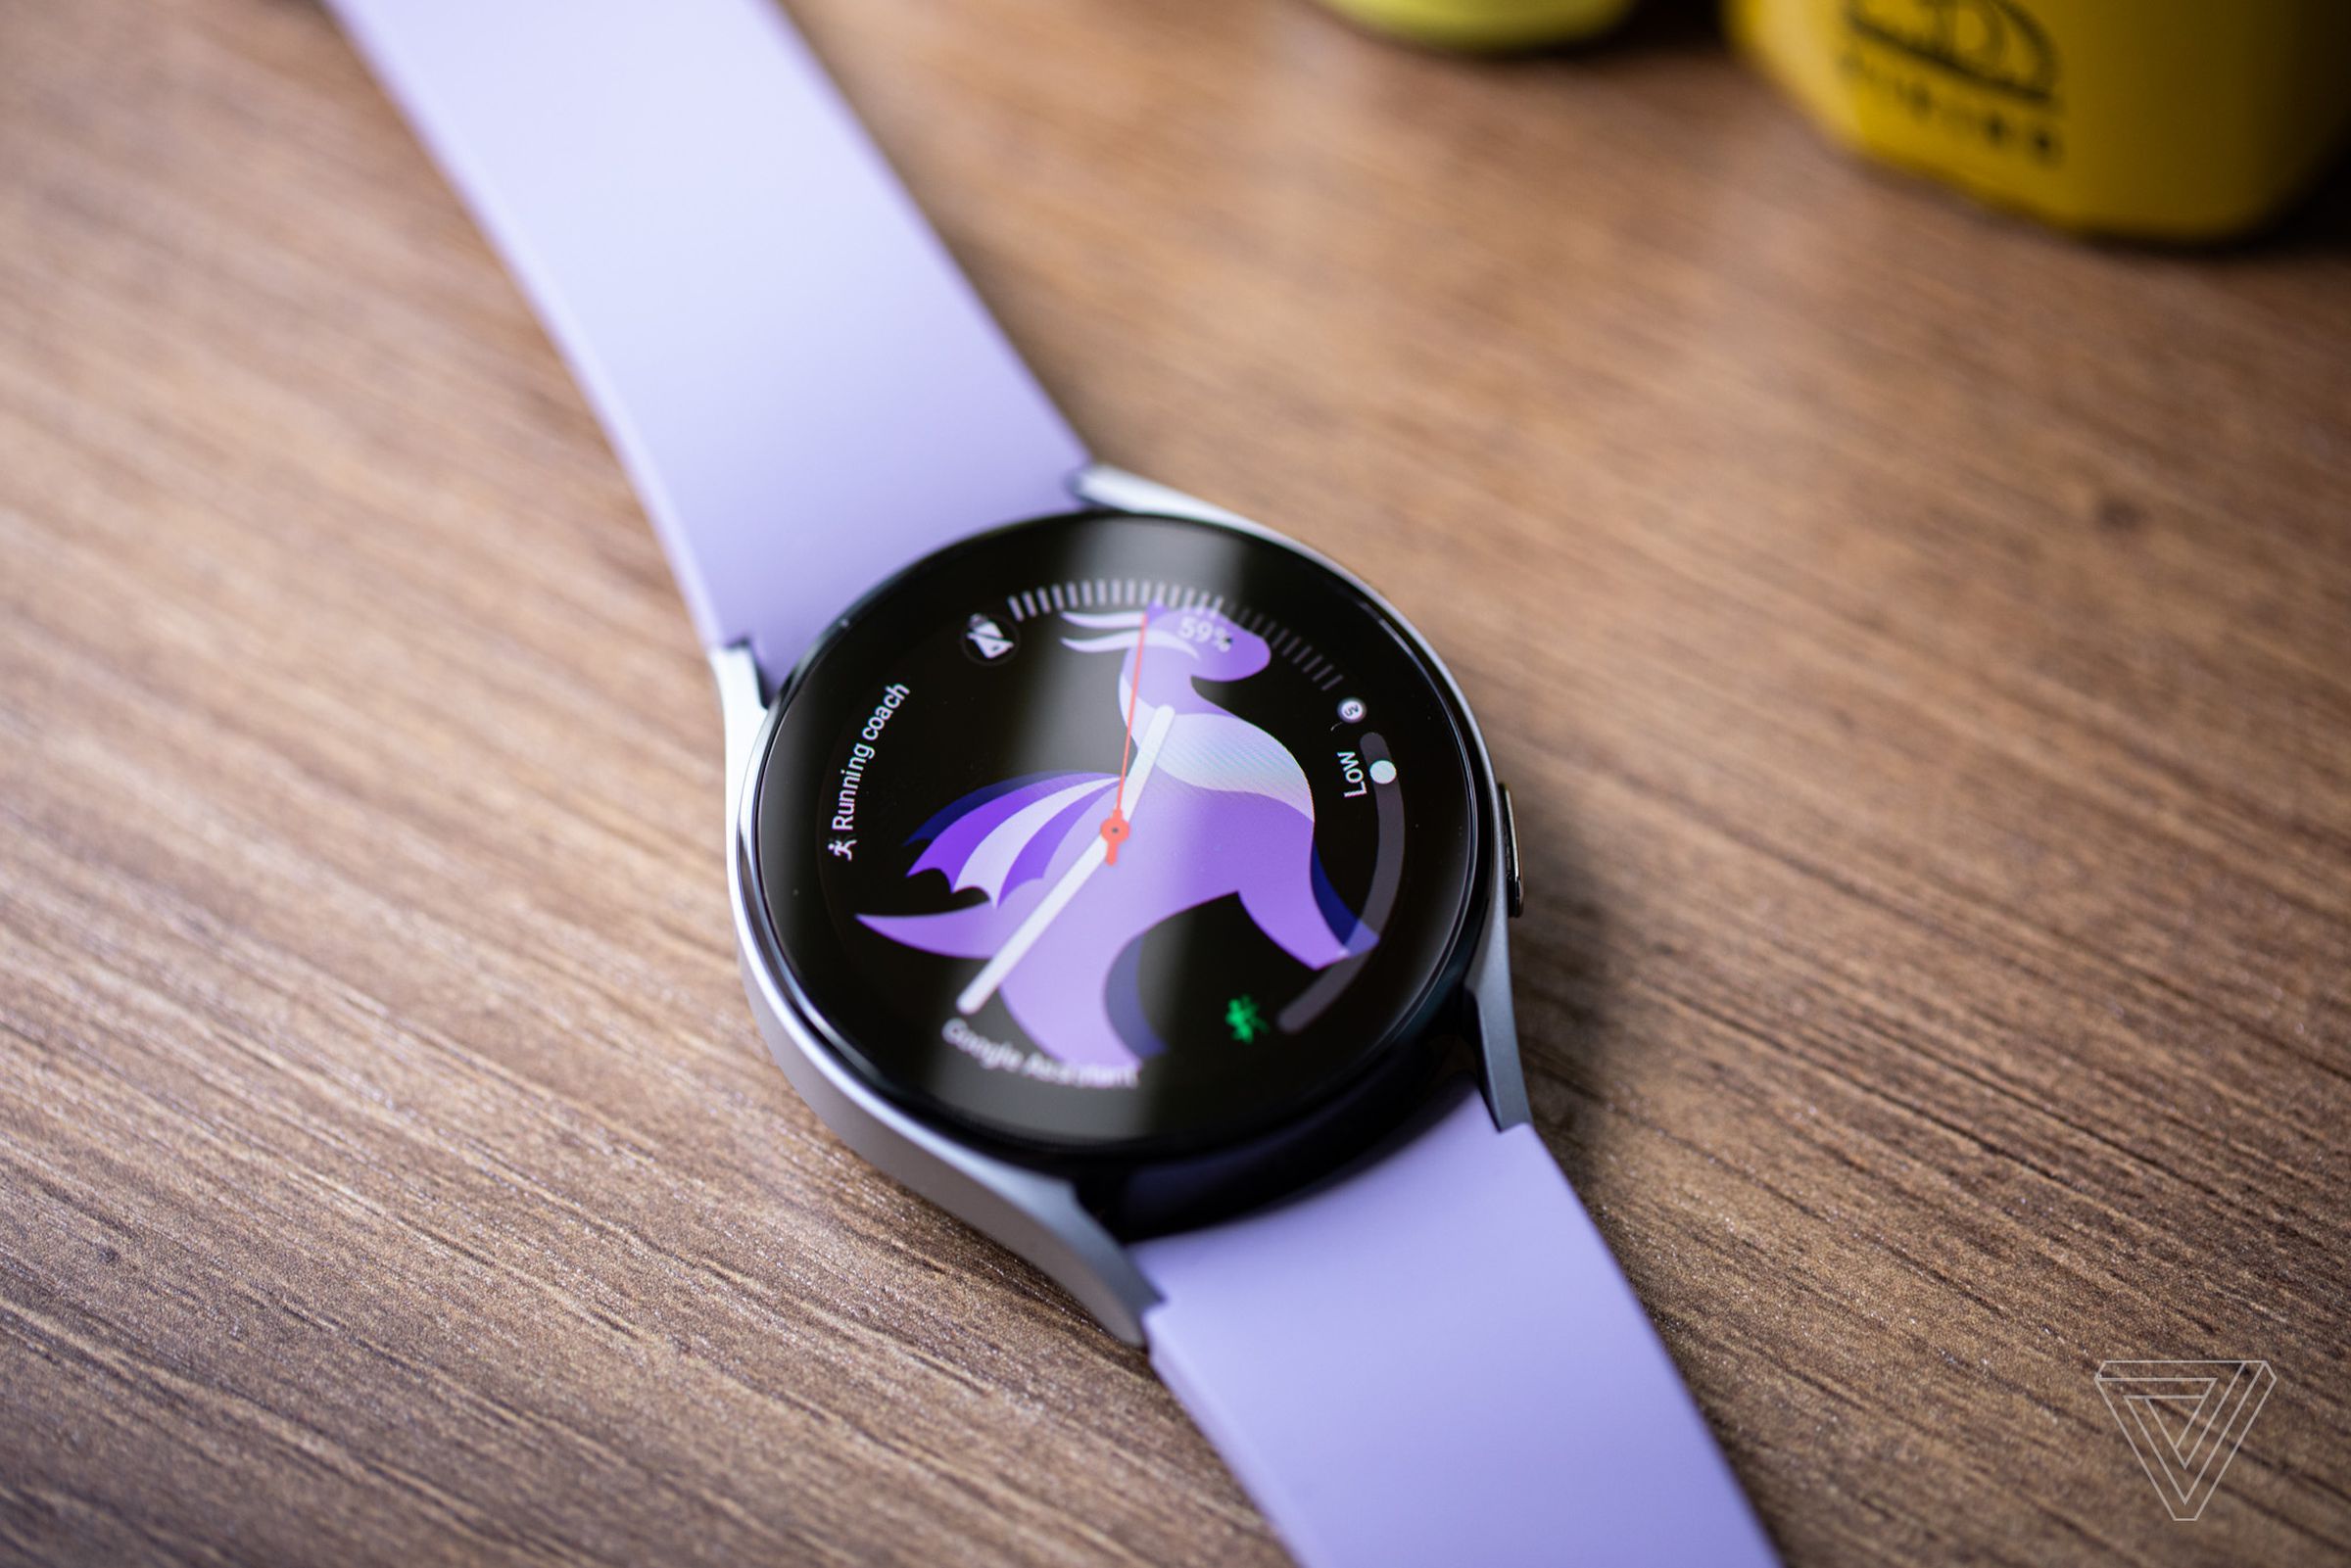 Samsung’s new Purple dragon watch face